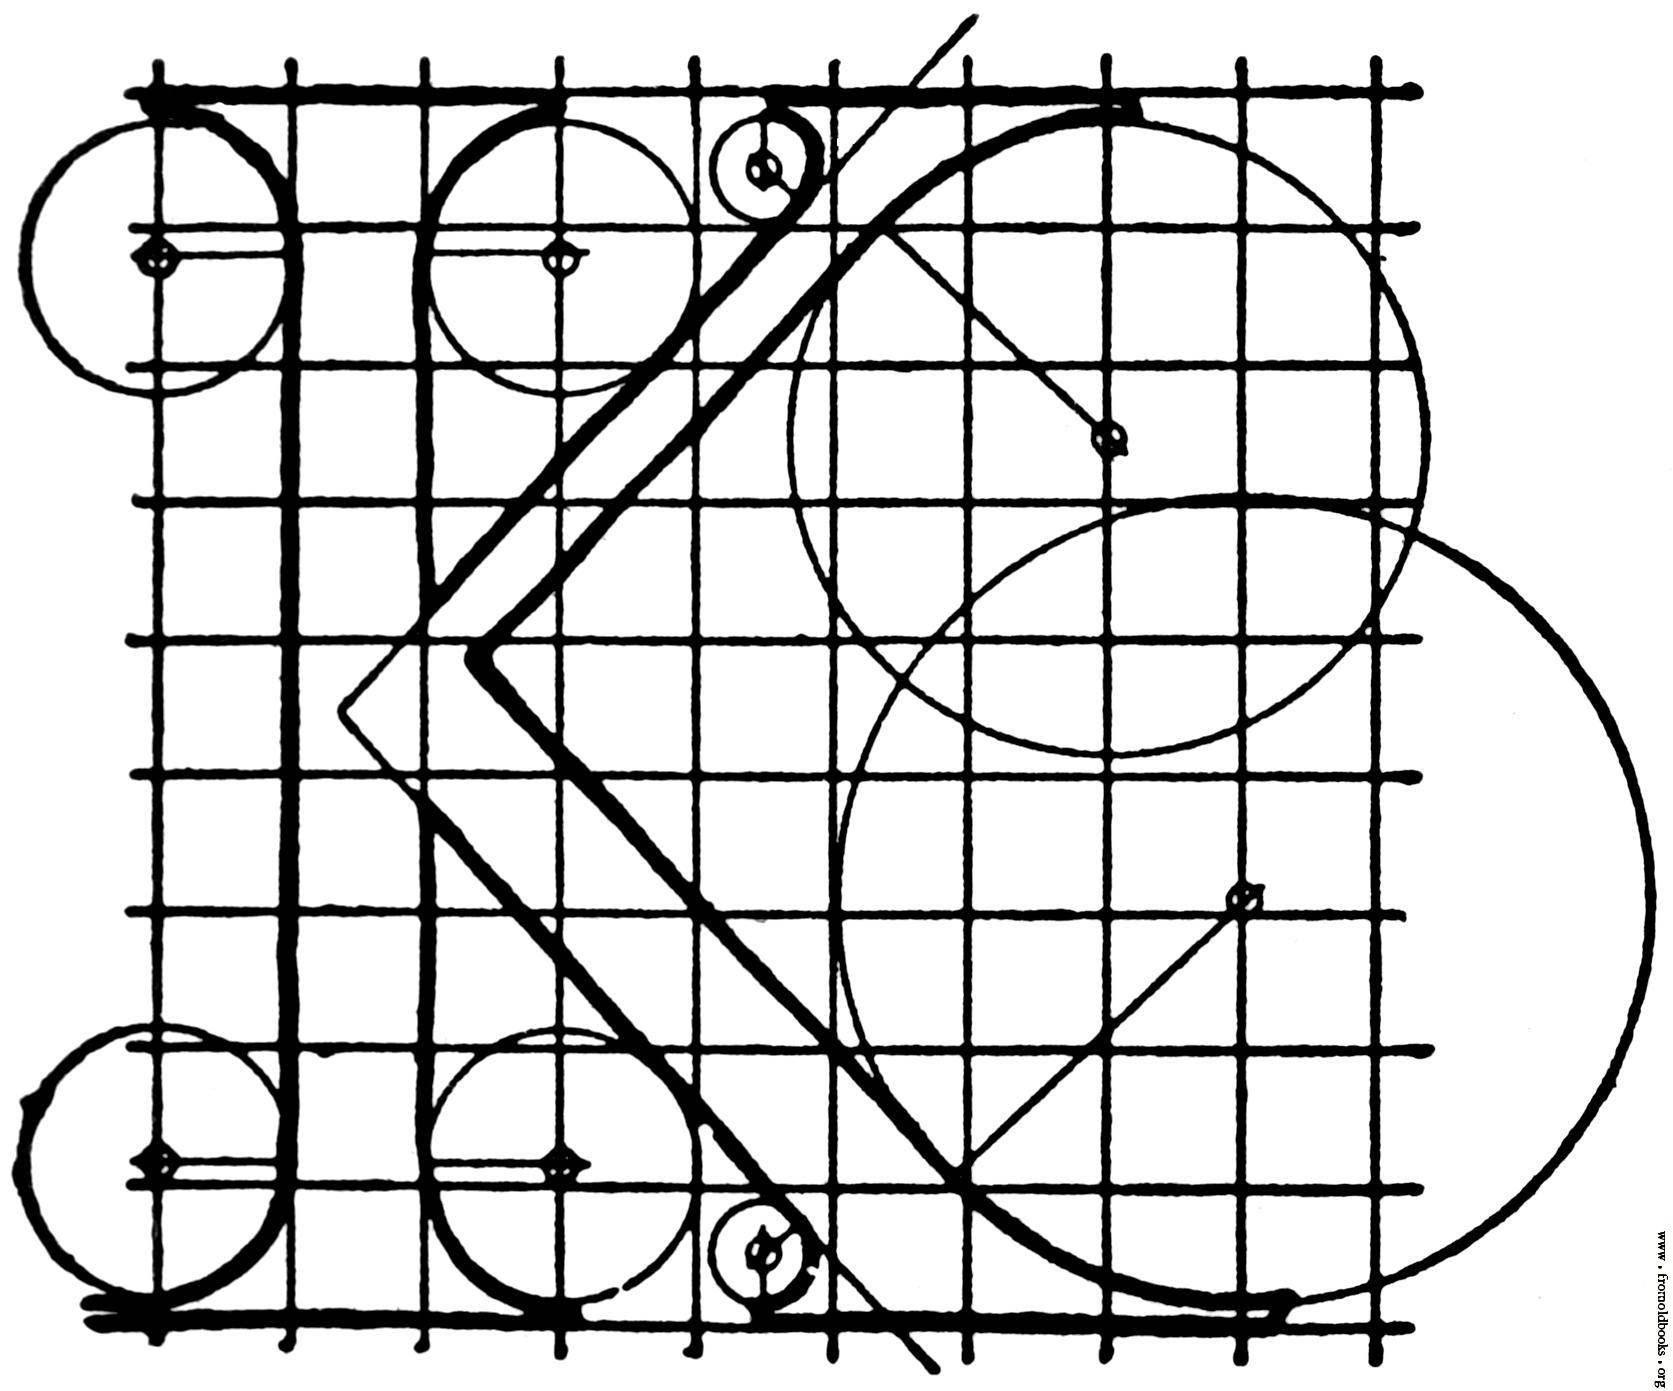 Letter K from “Alphabet after Serlio” [image 500x416 pixels]